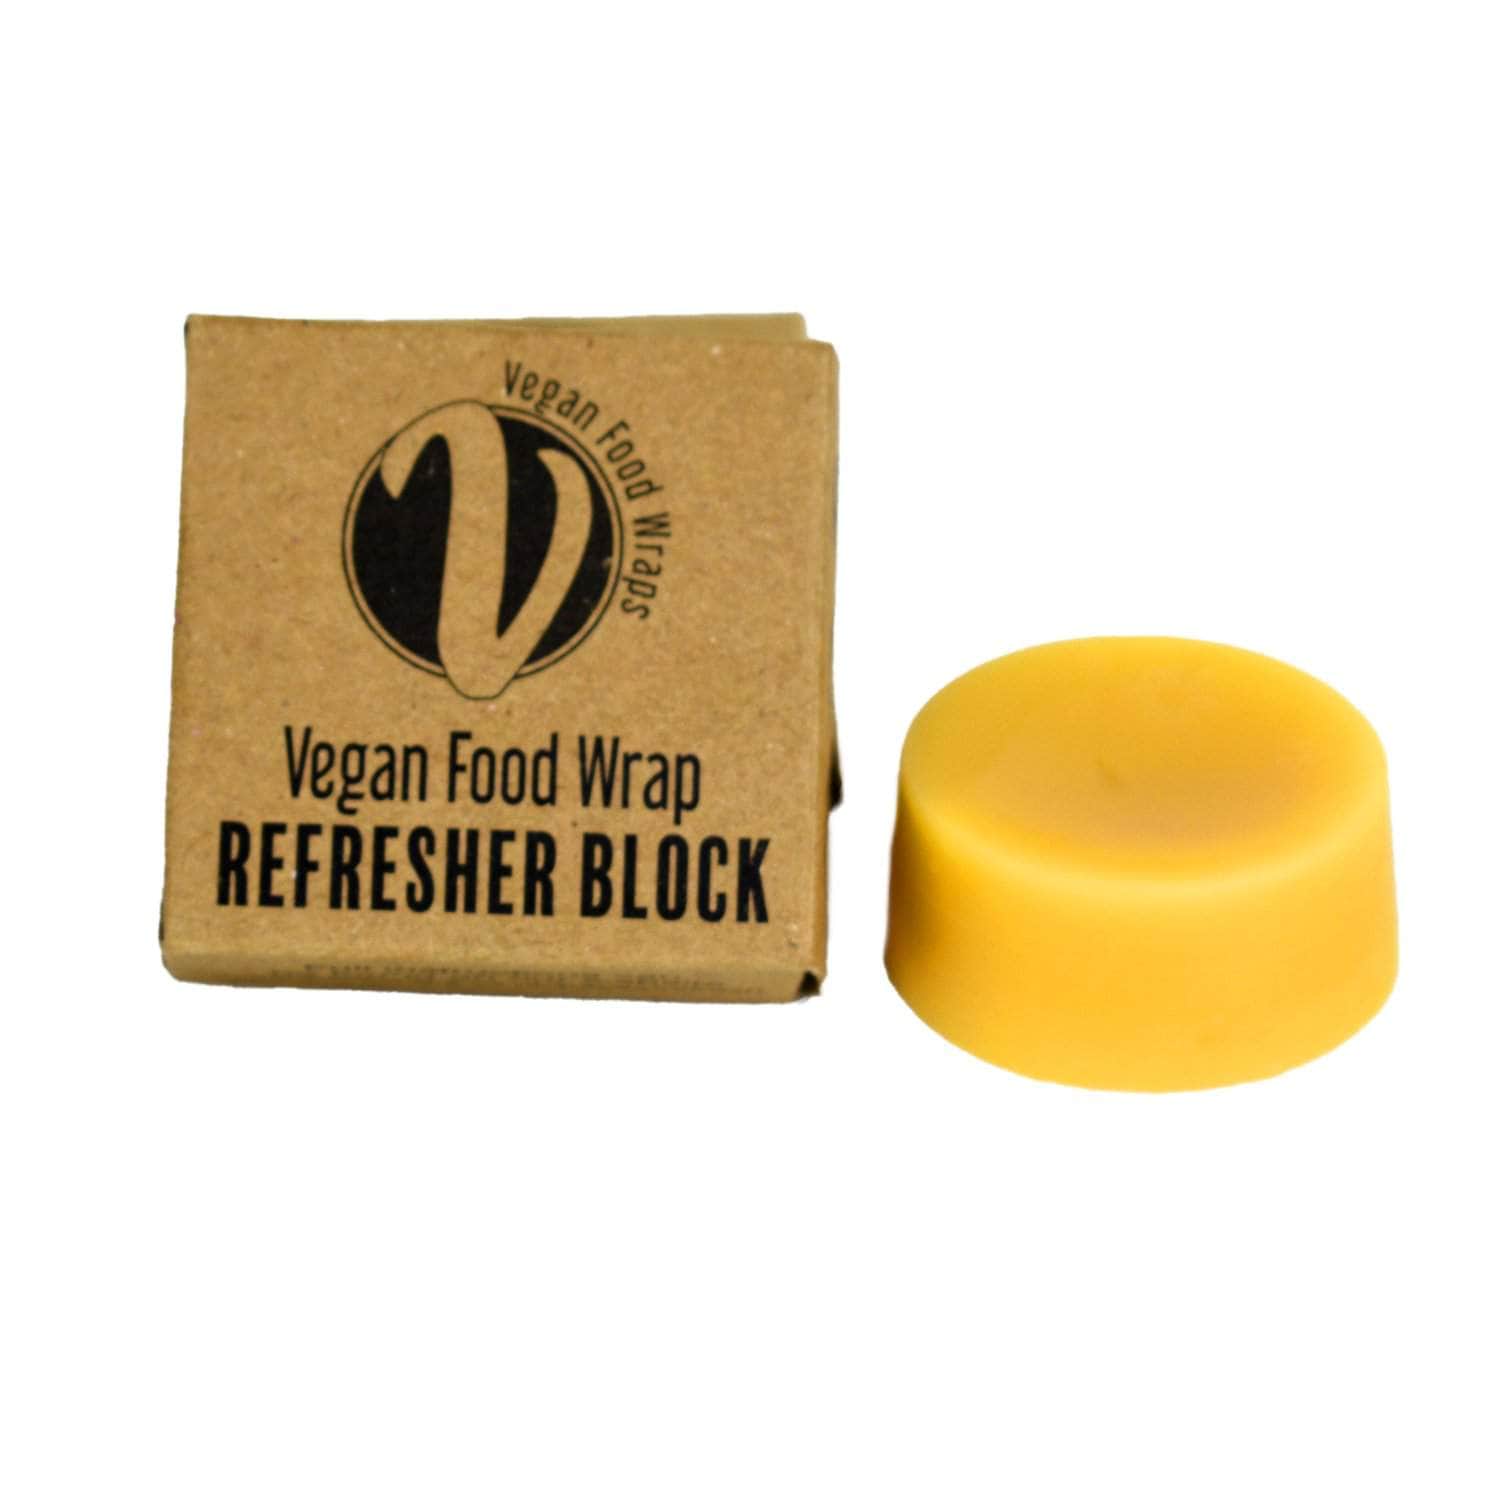 Vegan food wrap refresher block